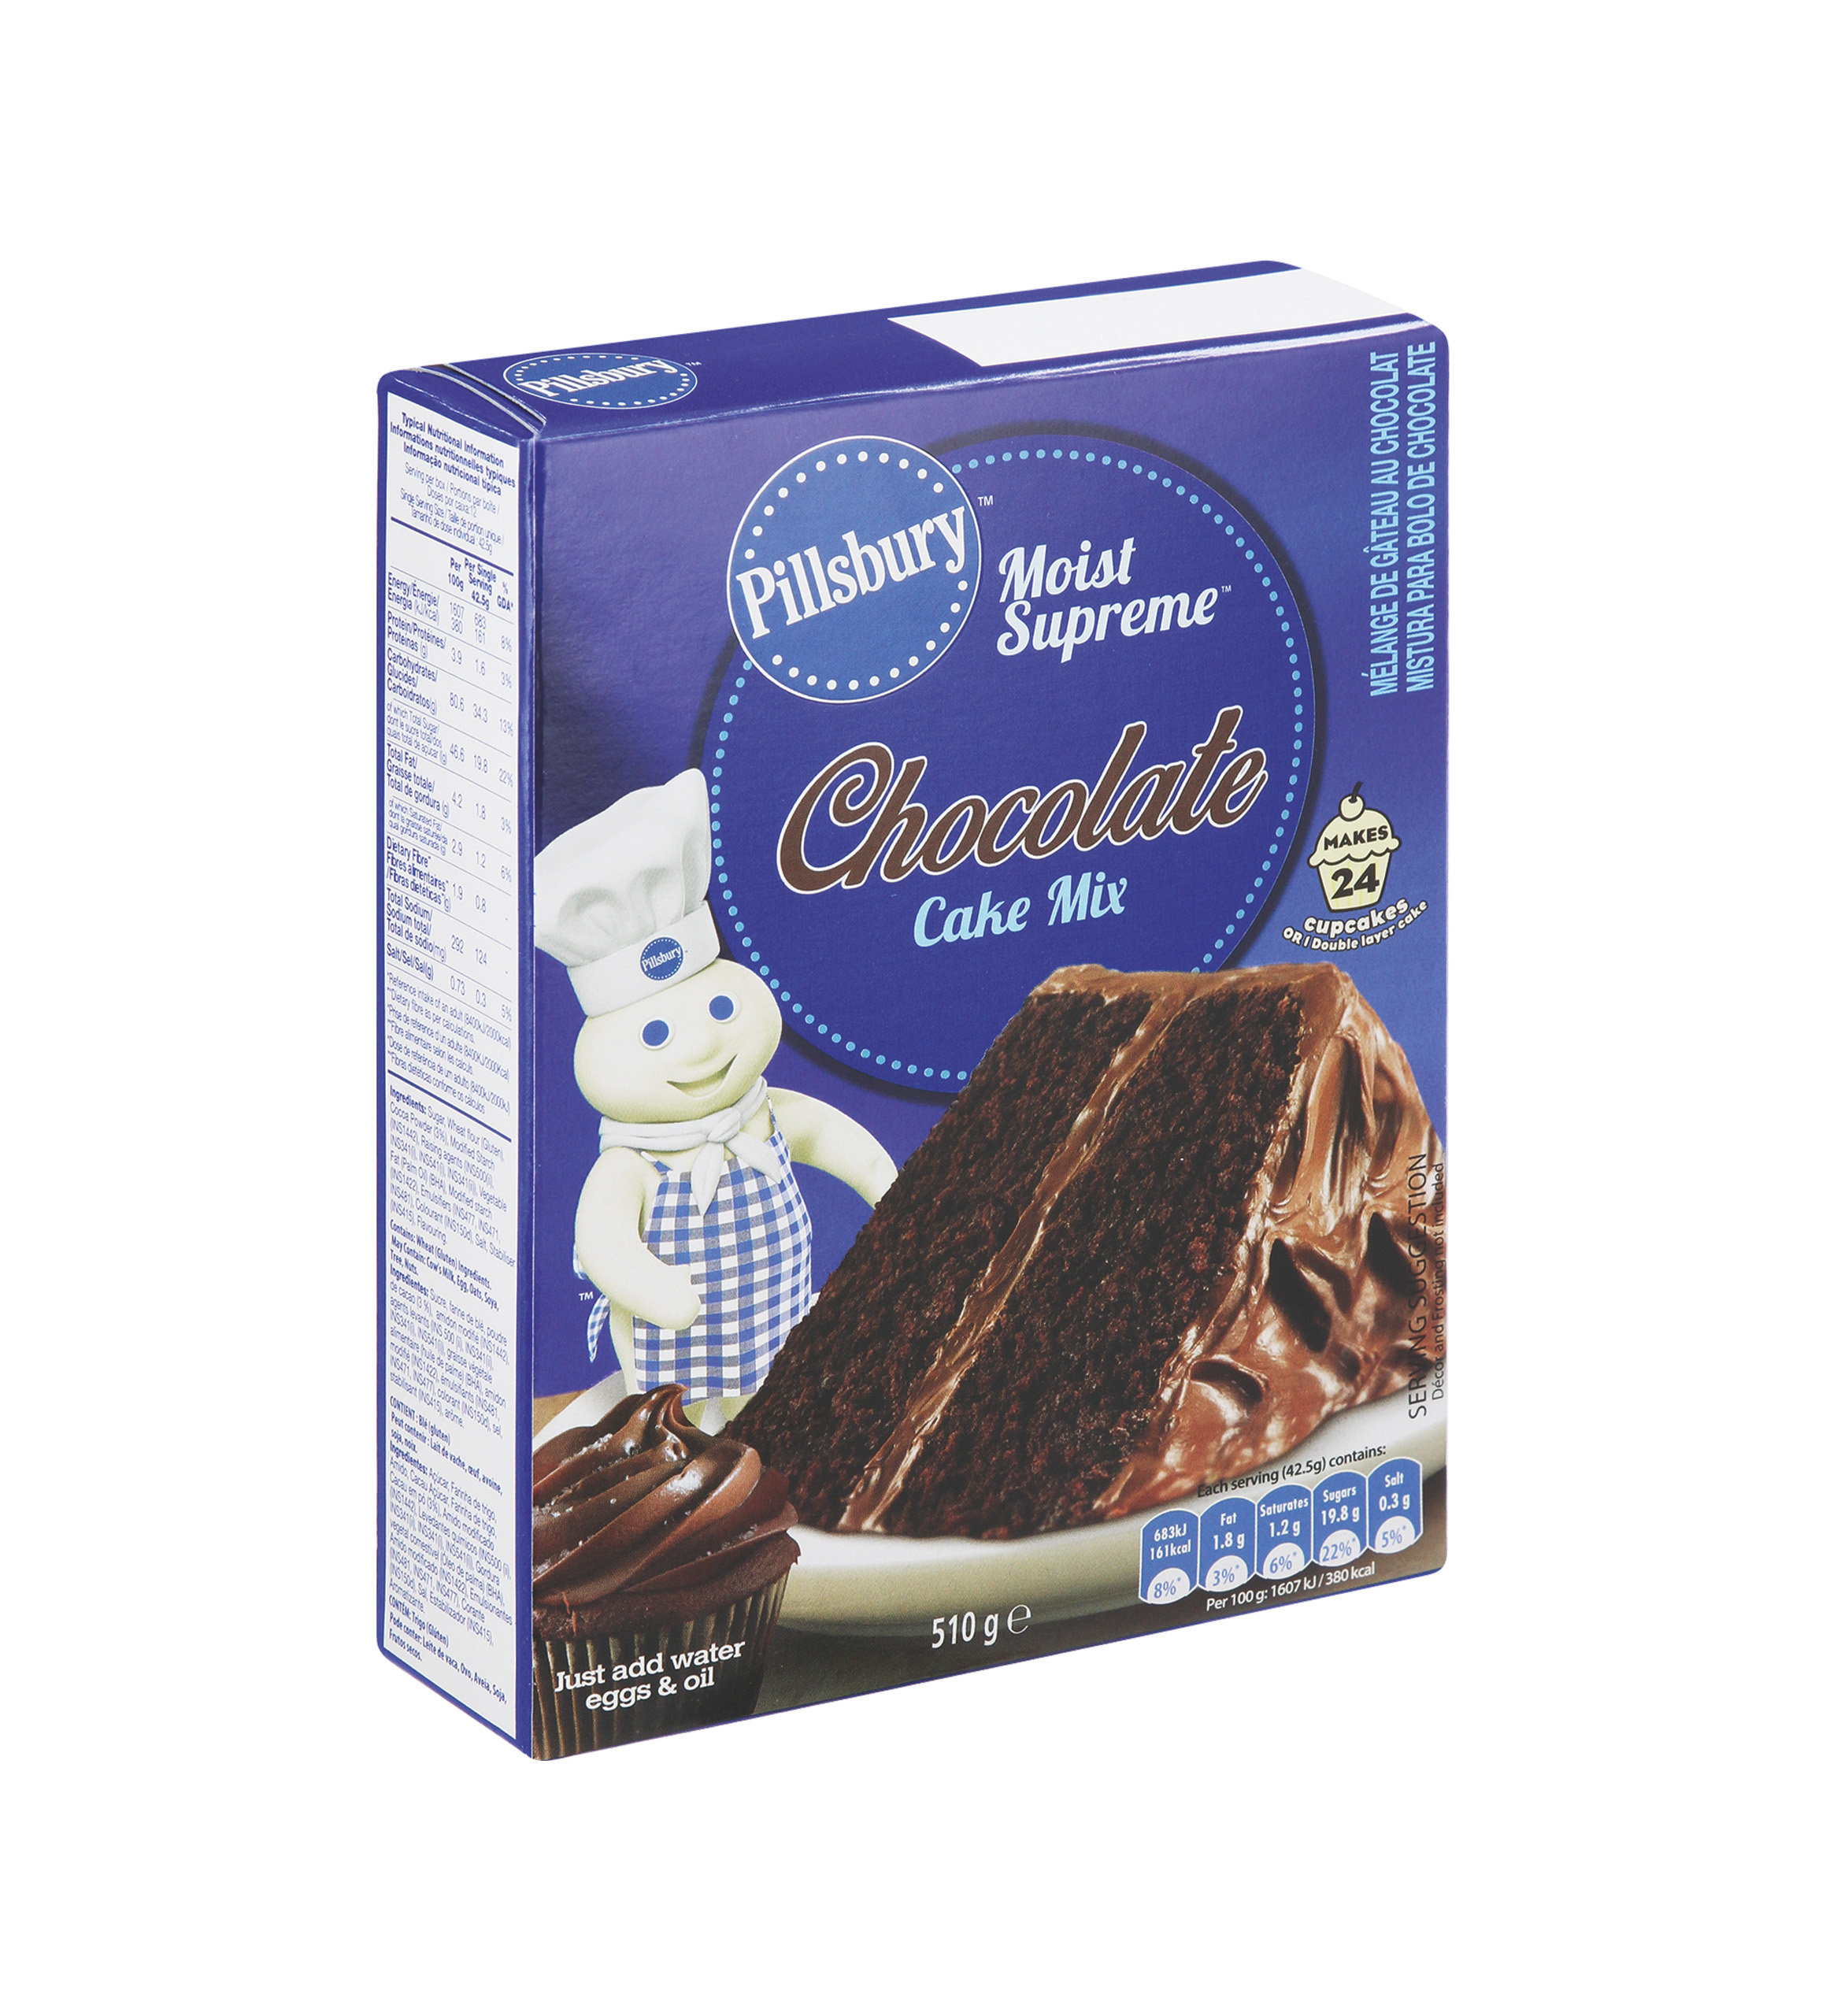 Pillsbury Cooker Cake Mix Chocolate Flavour | Pillsbury Cooker Cake Mix |  Pillsbury Chocolate Cake - YouTube